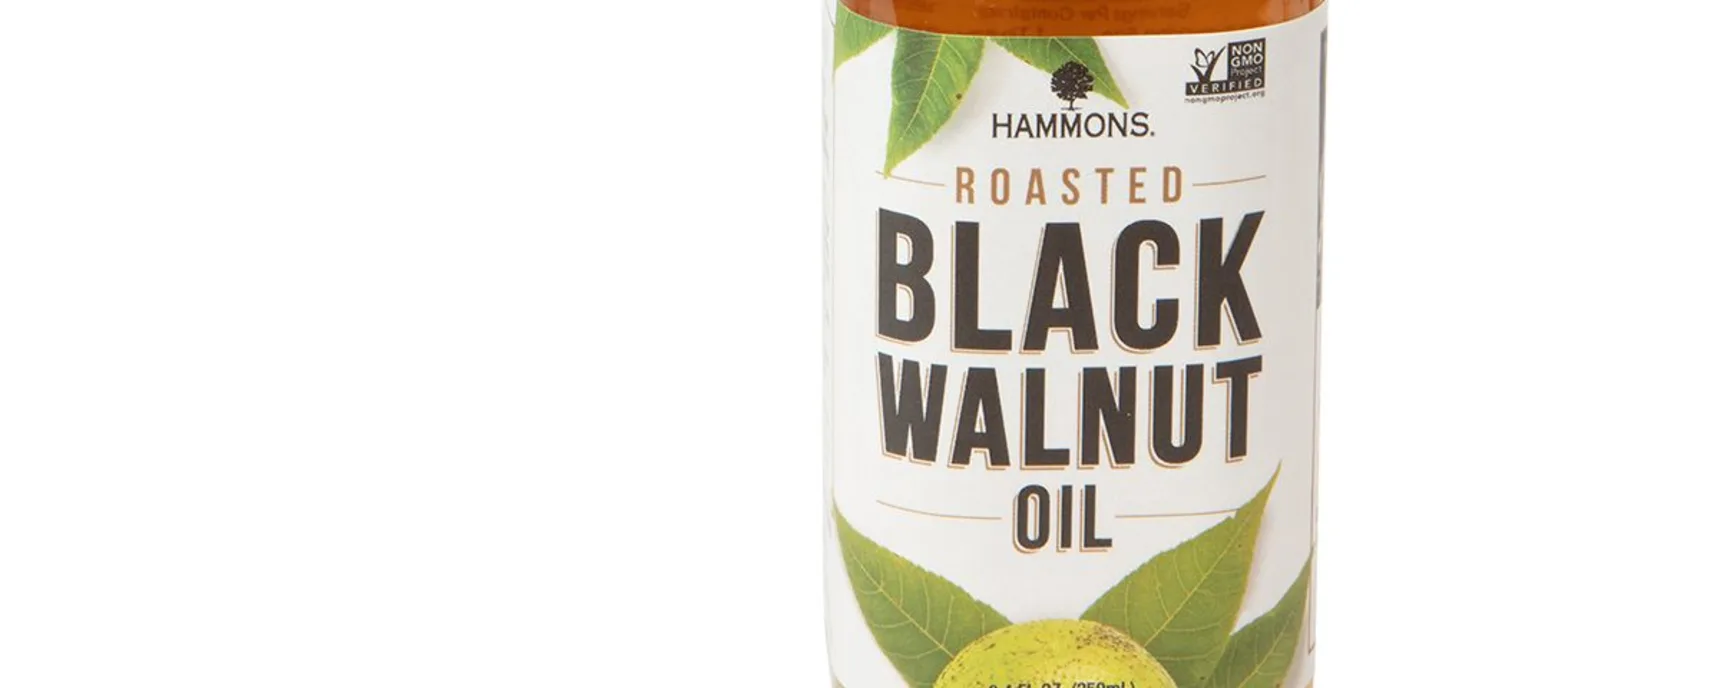 Hammons Black Walnuts banner